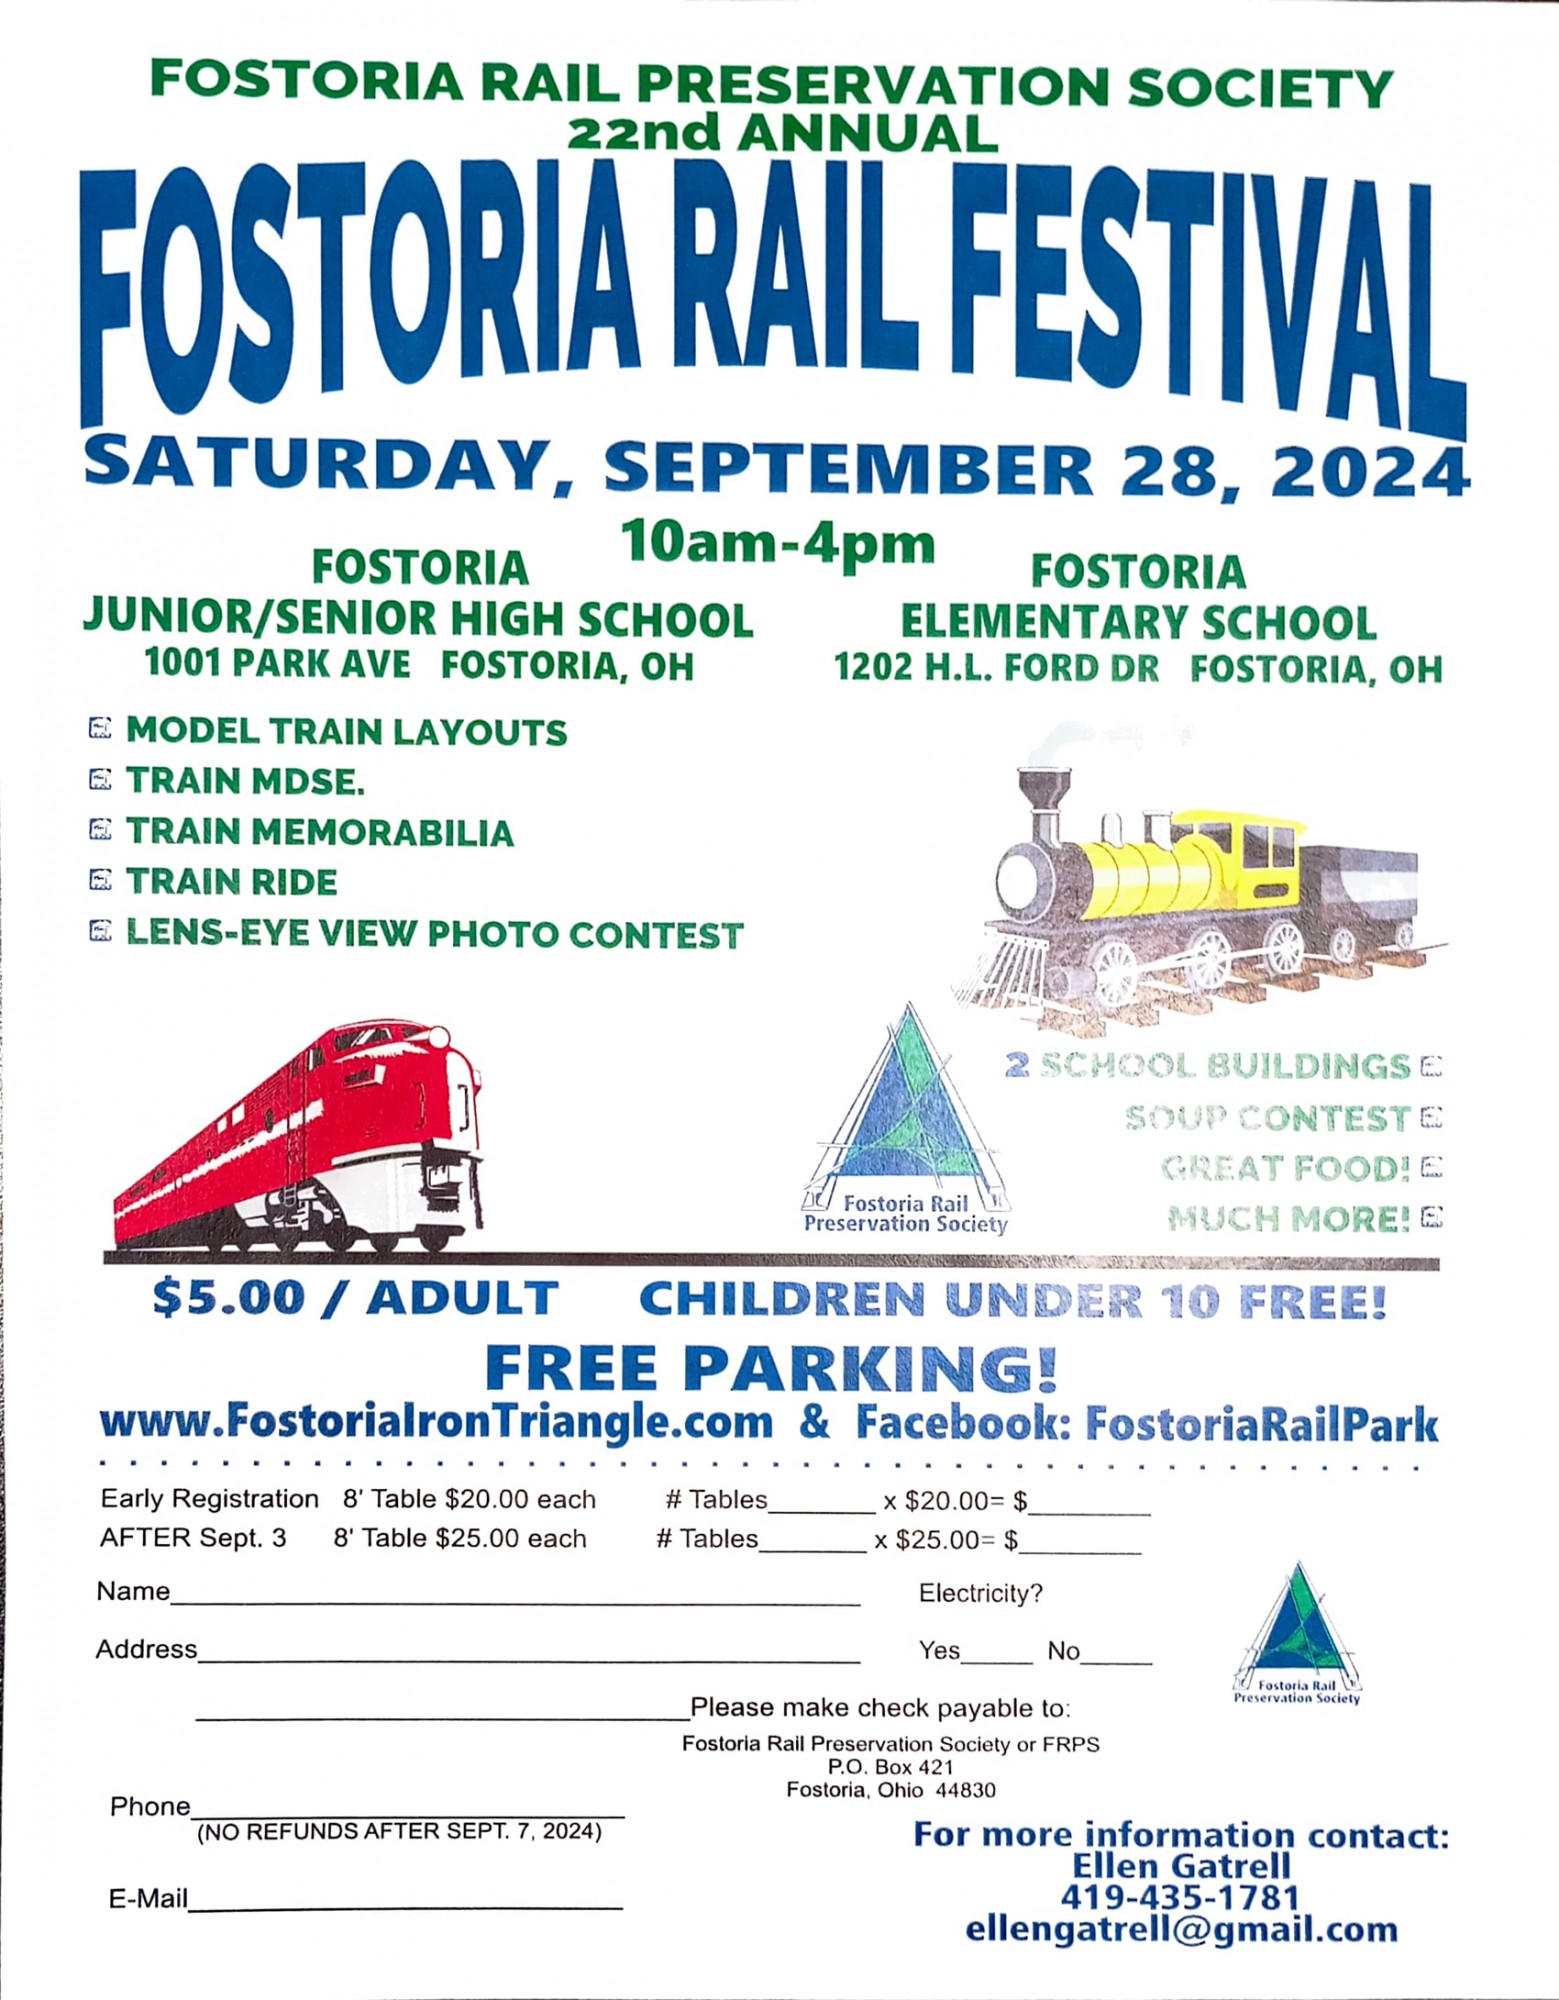 22nd Annual Fostoria Rail Festival